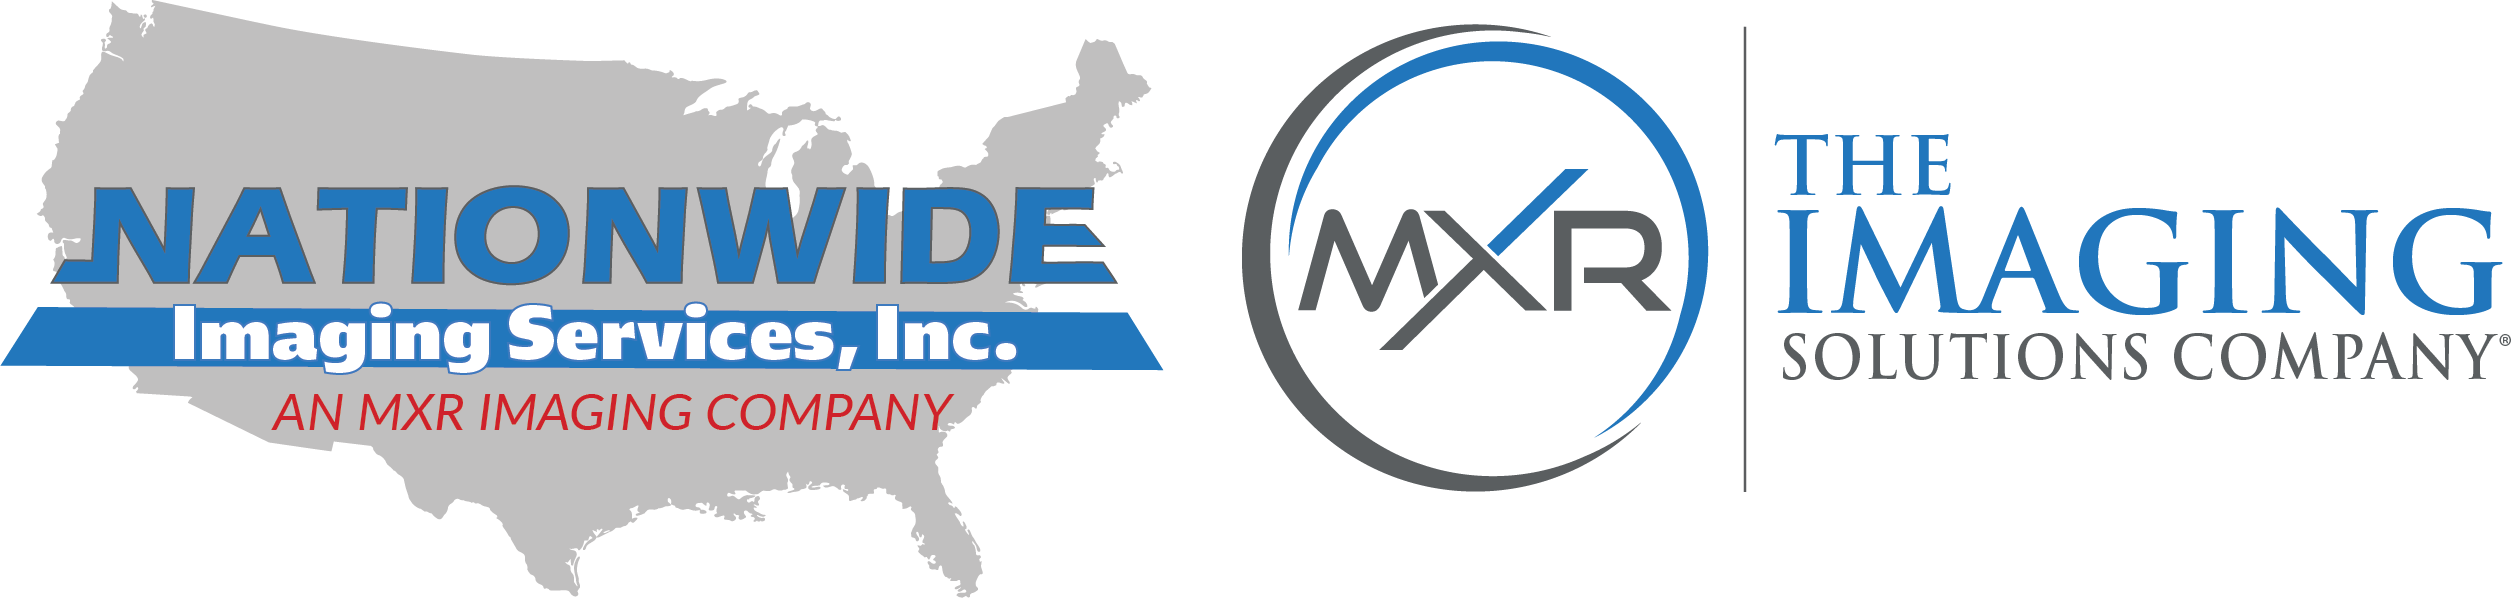 MXR Imaging and Nationwide Imaging Dual Logo